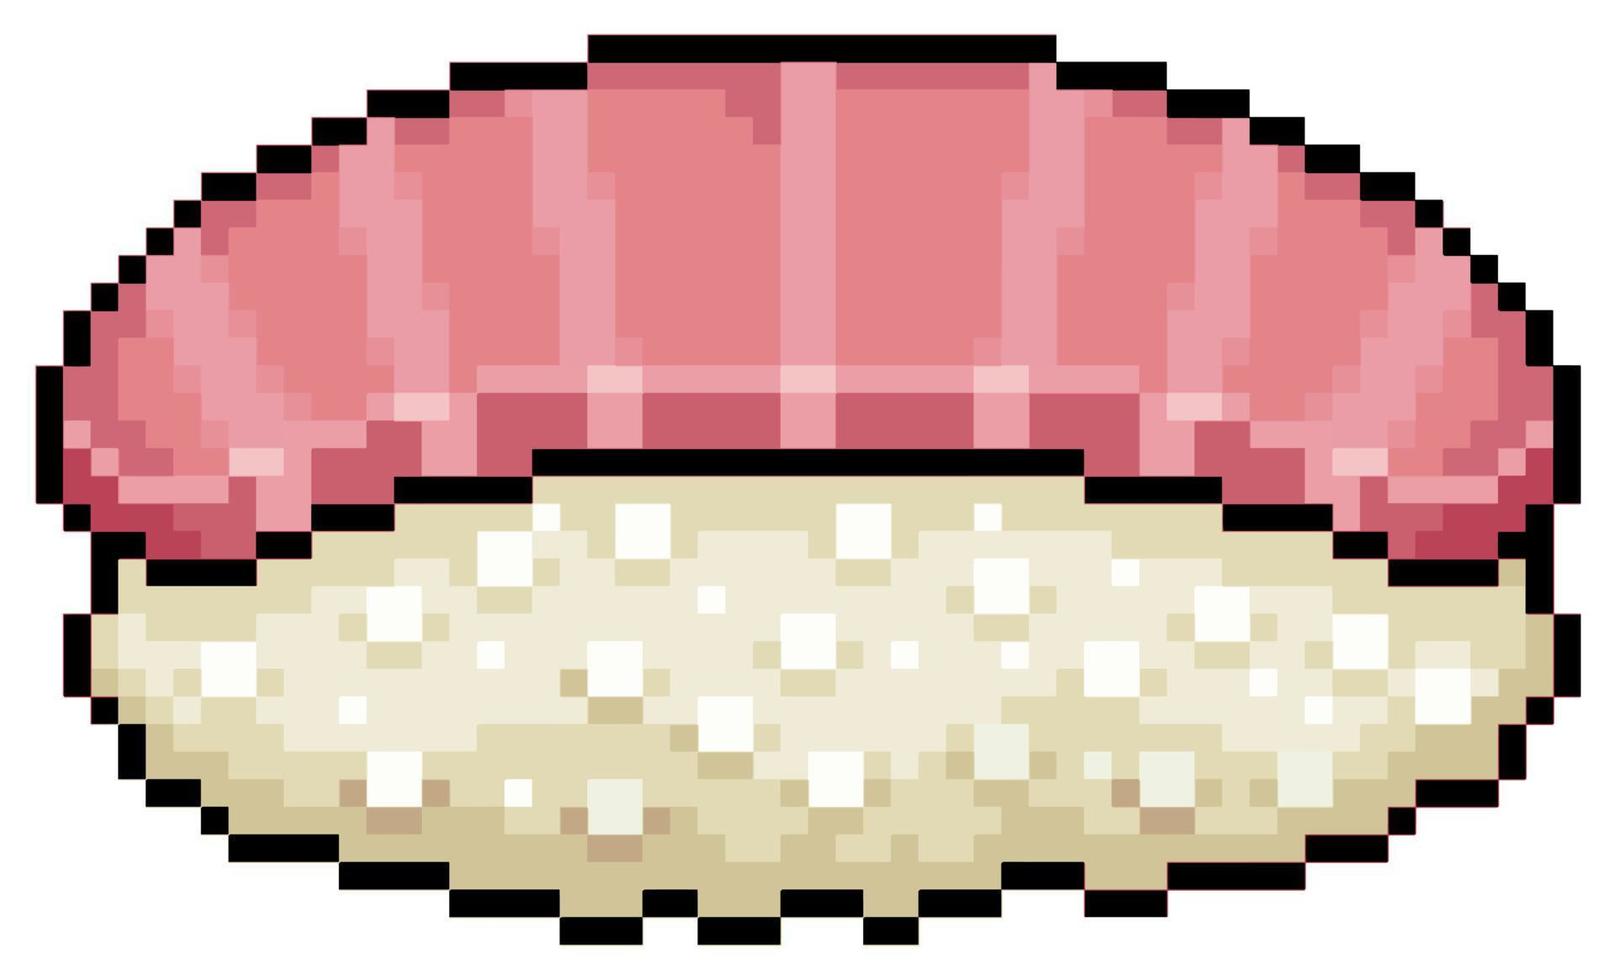 Pixel art toro nigiri sushi japanese food vector icon for 8bit game on white background